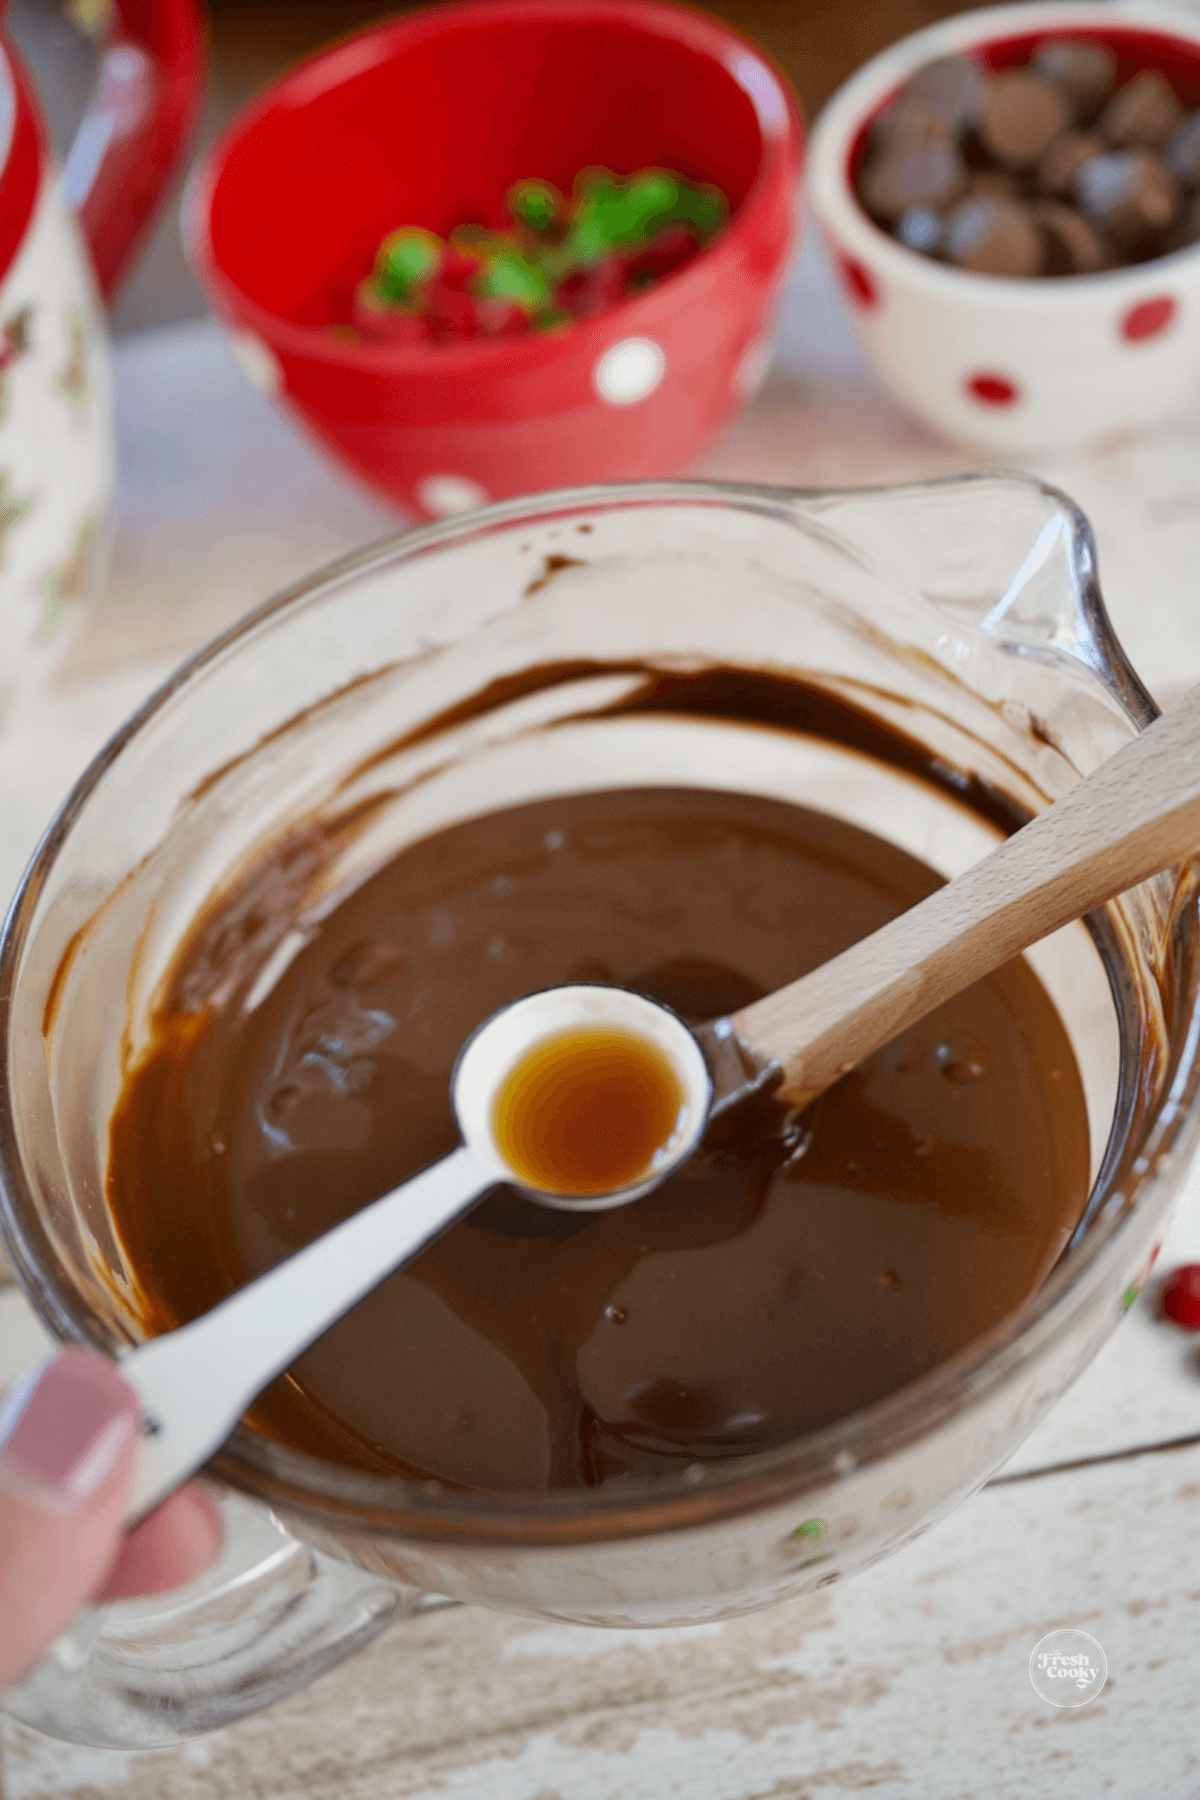 Adding vanilla extract to chocolate peanut butter mixture. 